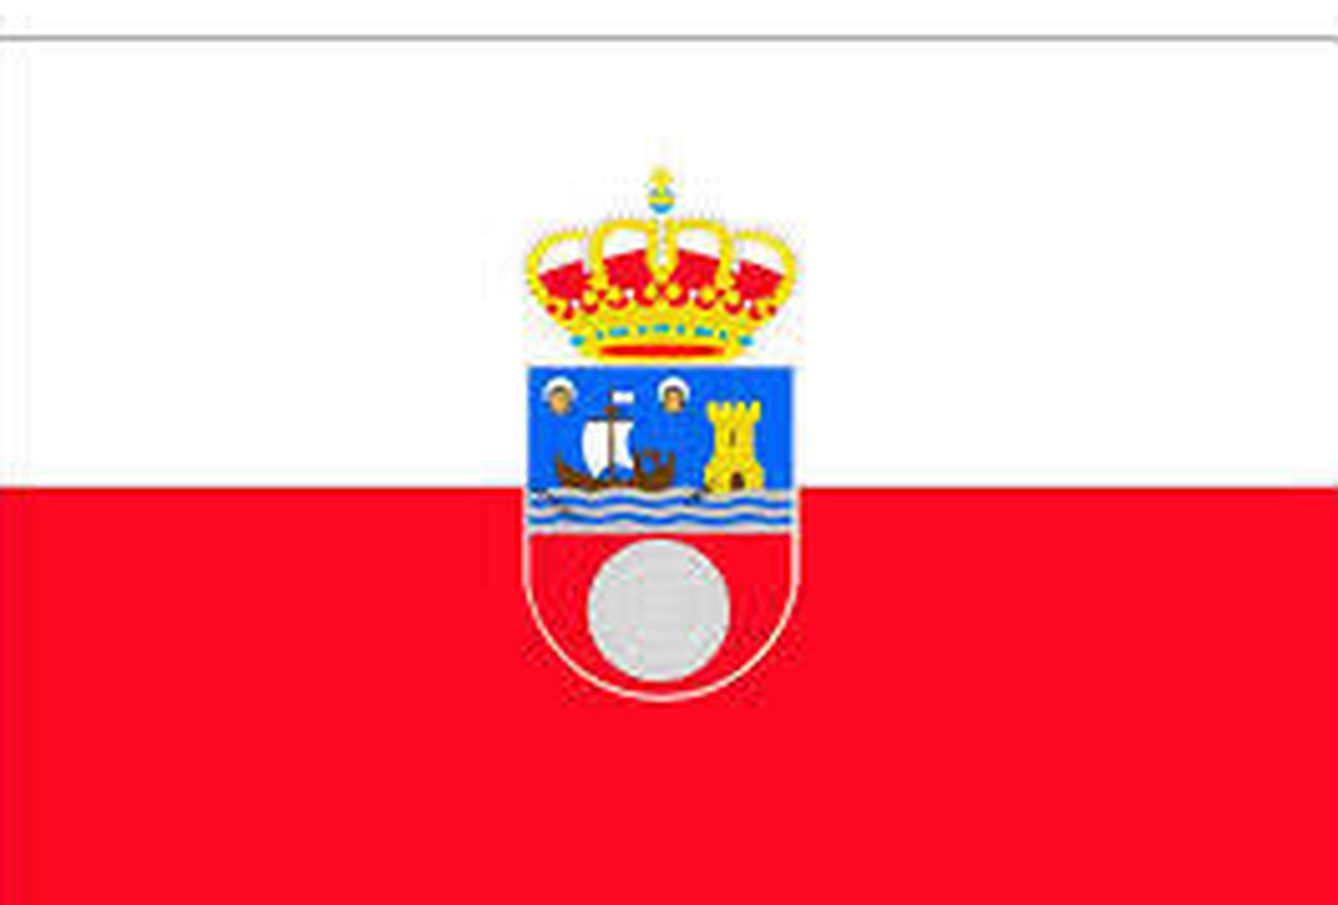 Bandera de Cantabria